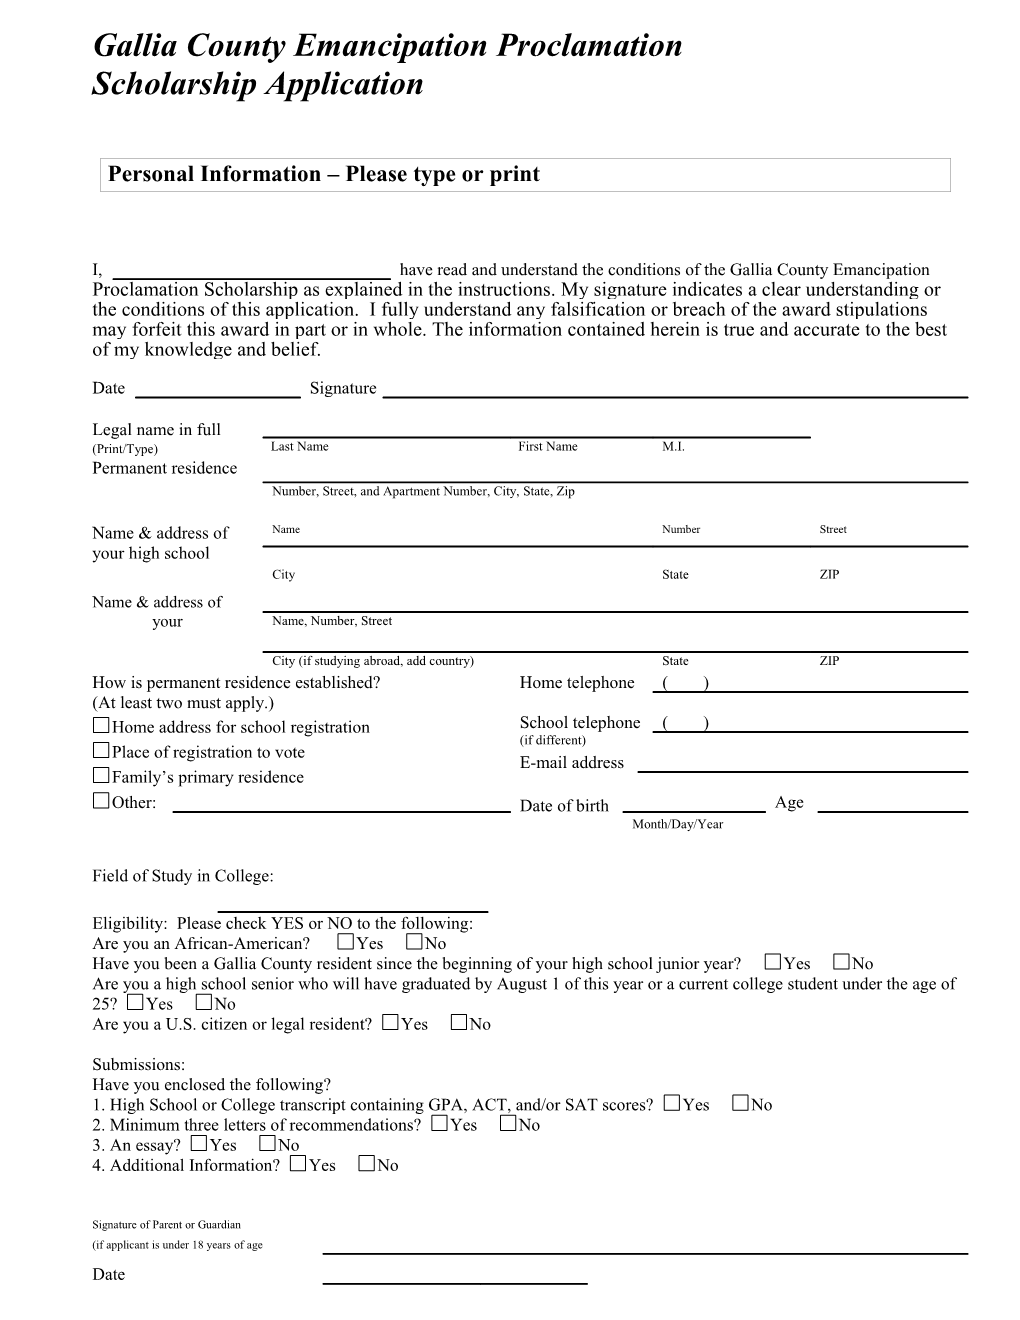 Galliacounty Emancipation Proclamation Scholarship Application